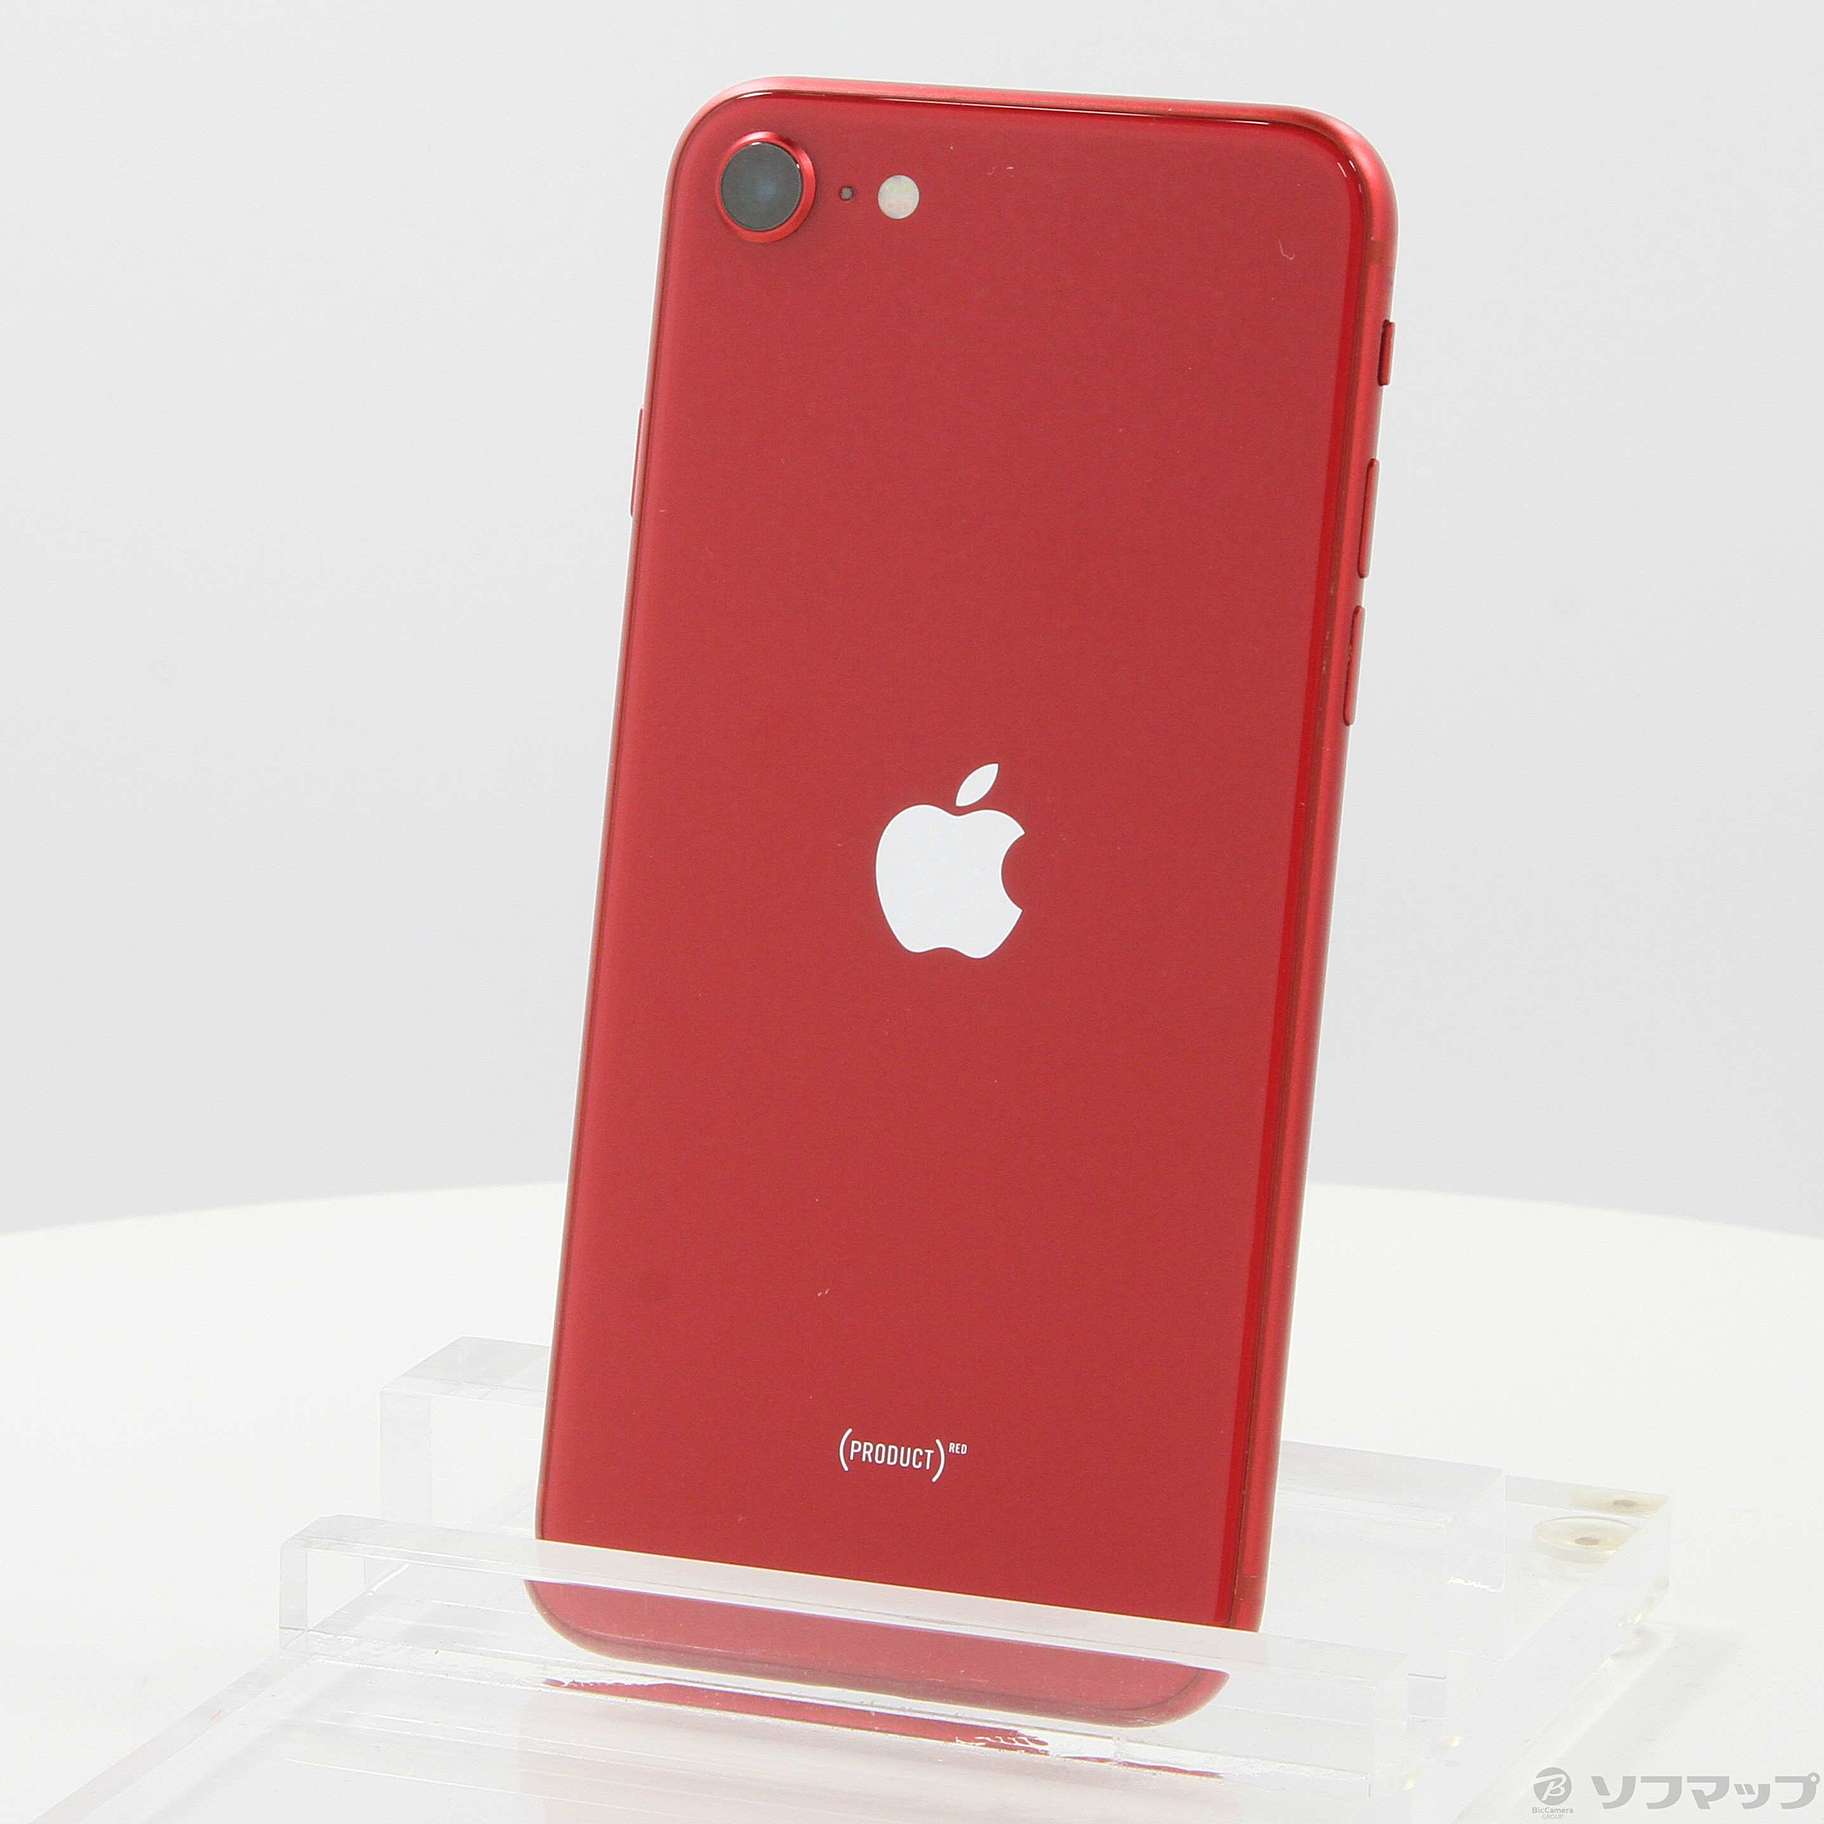 iPhone SE (第2世代) (PRODUCT)RED 128GB SIMフリー [レッド] 中古(白 ...